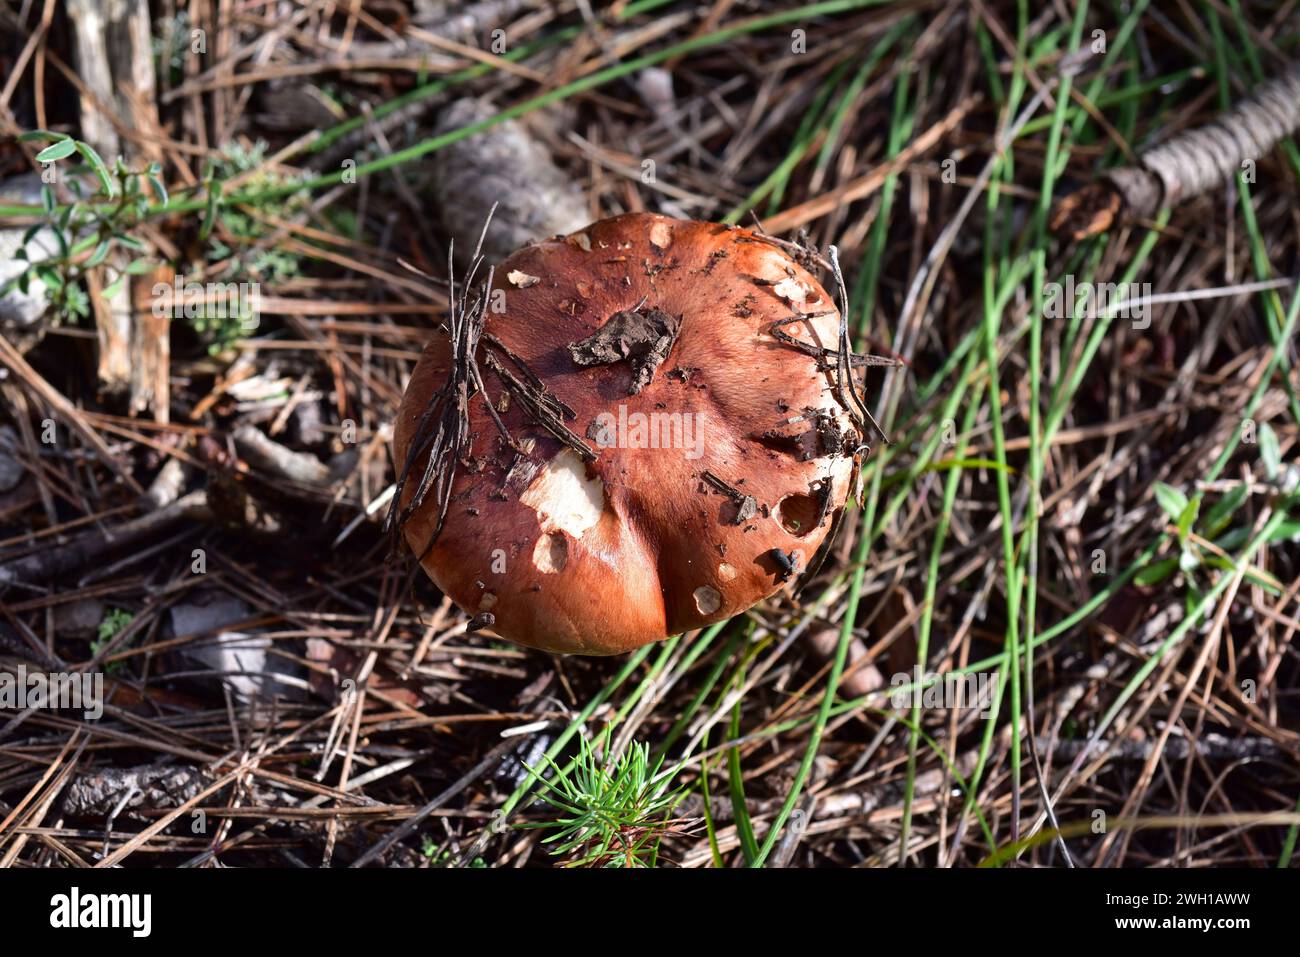 Tricholoma batschii or Tricholoma fracticum is an inedible mushroom. This photo was taken near La Llacuna, Barcelona province, Catalonia, Spain. Stock Photo